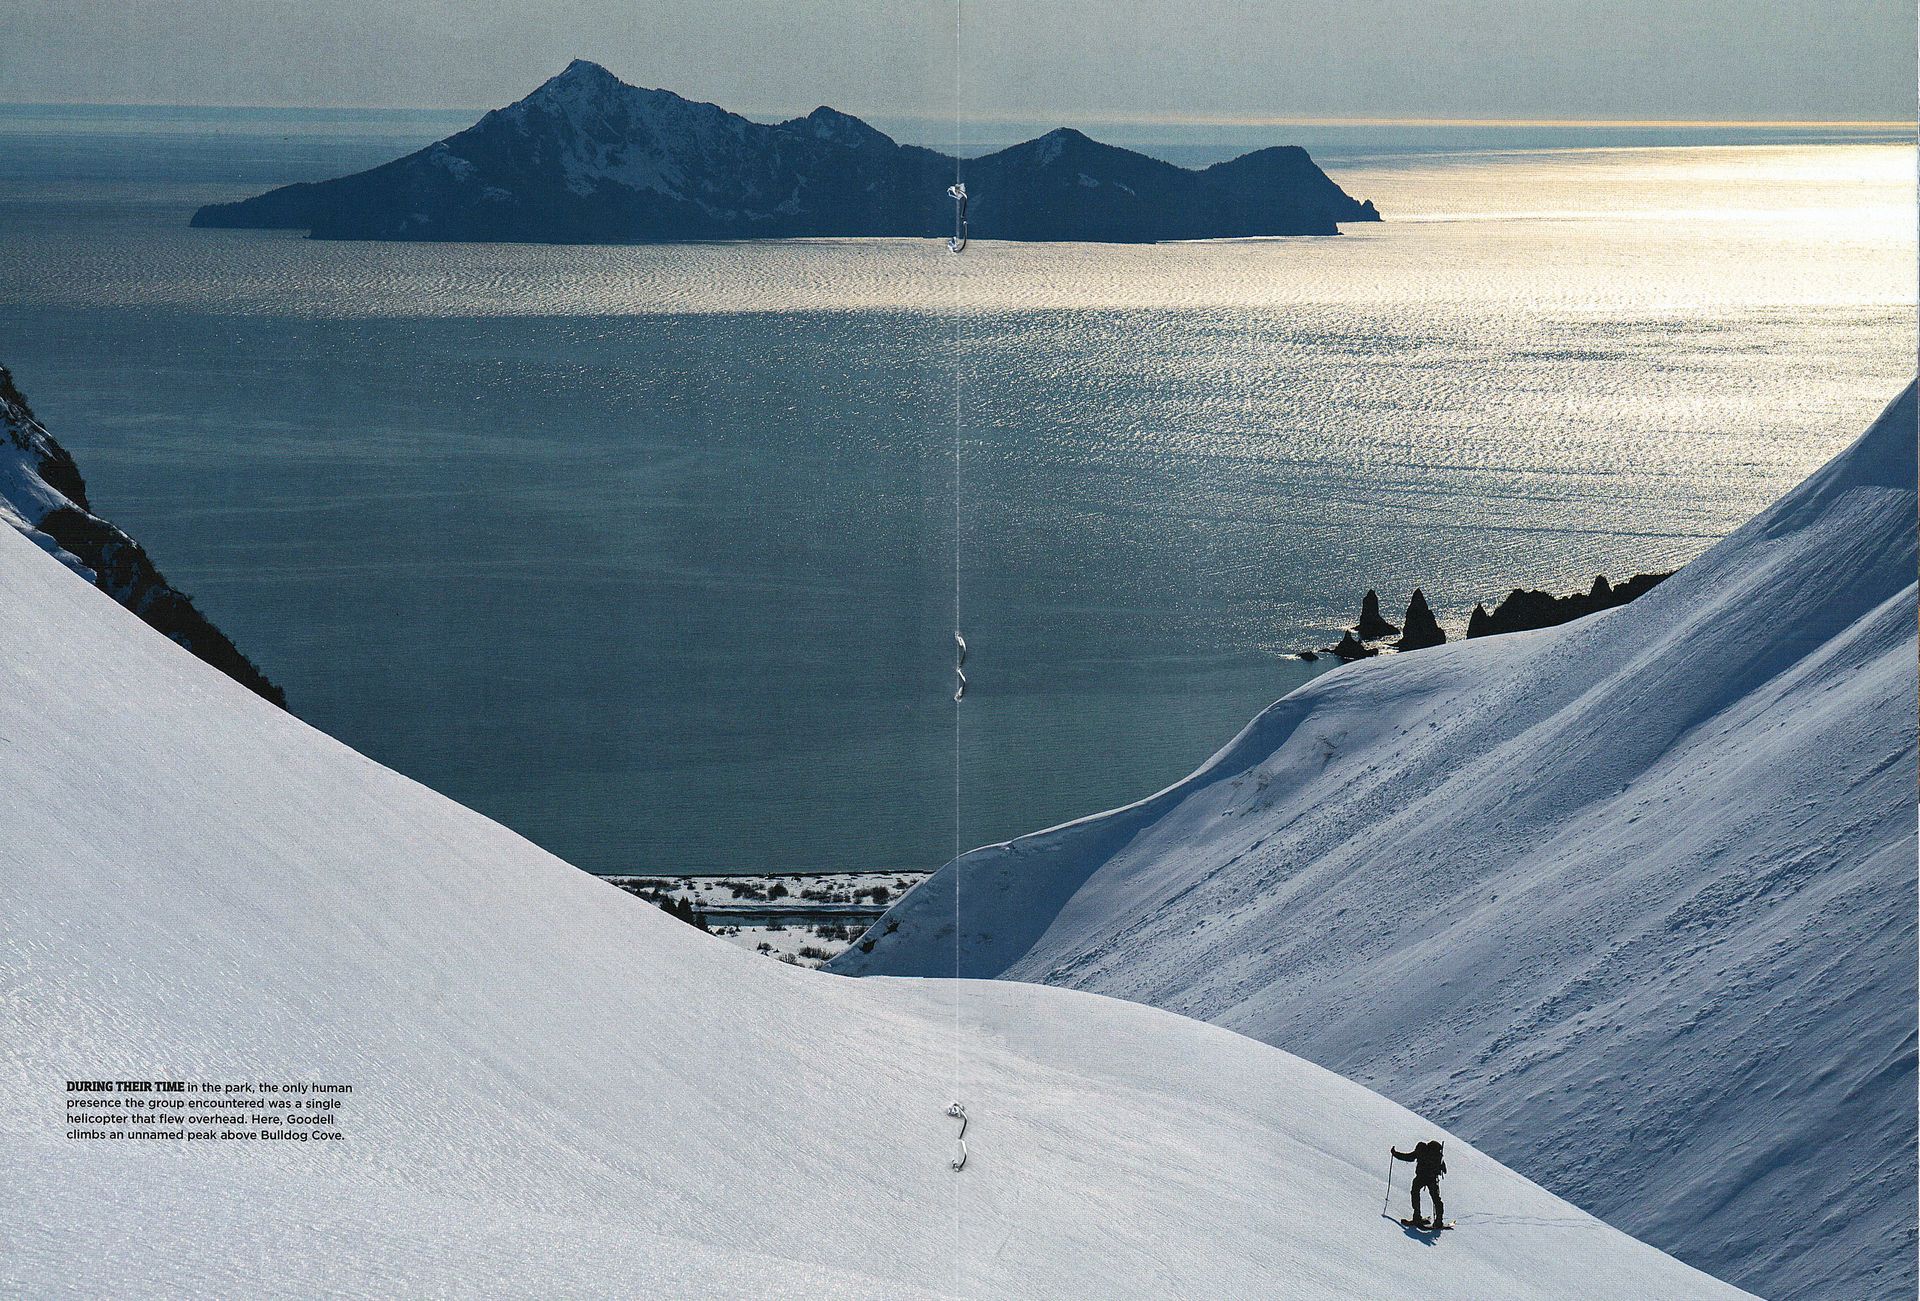 National Parks Magazine, Kenai Fjords, Backcountry skiing, sailing